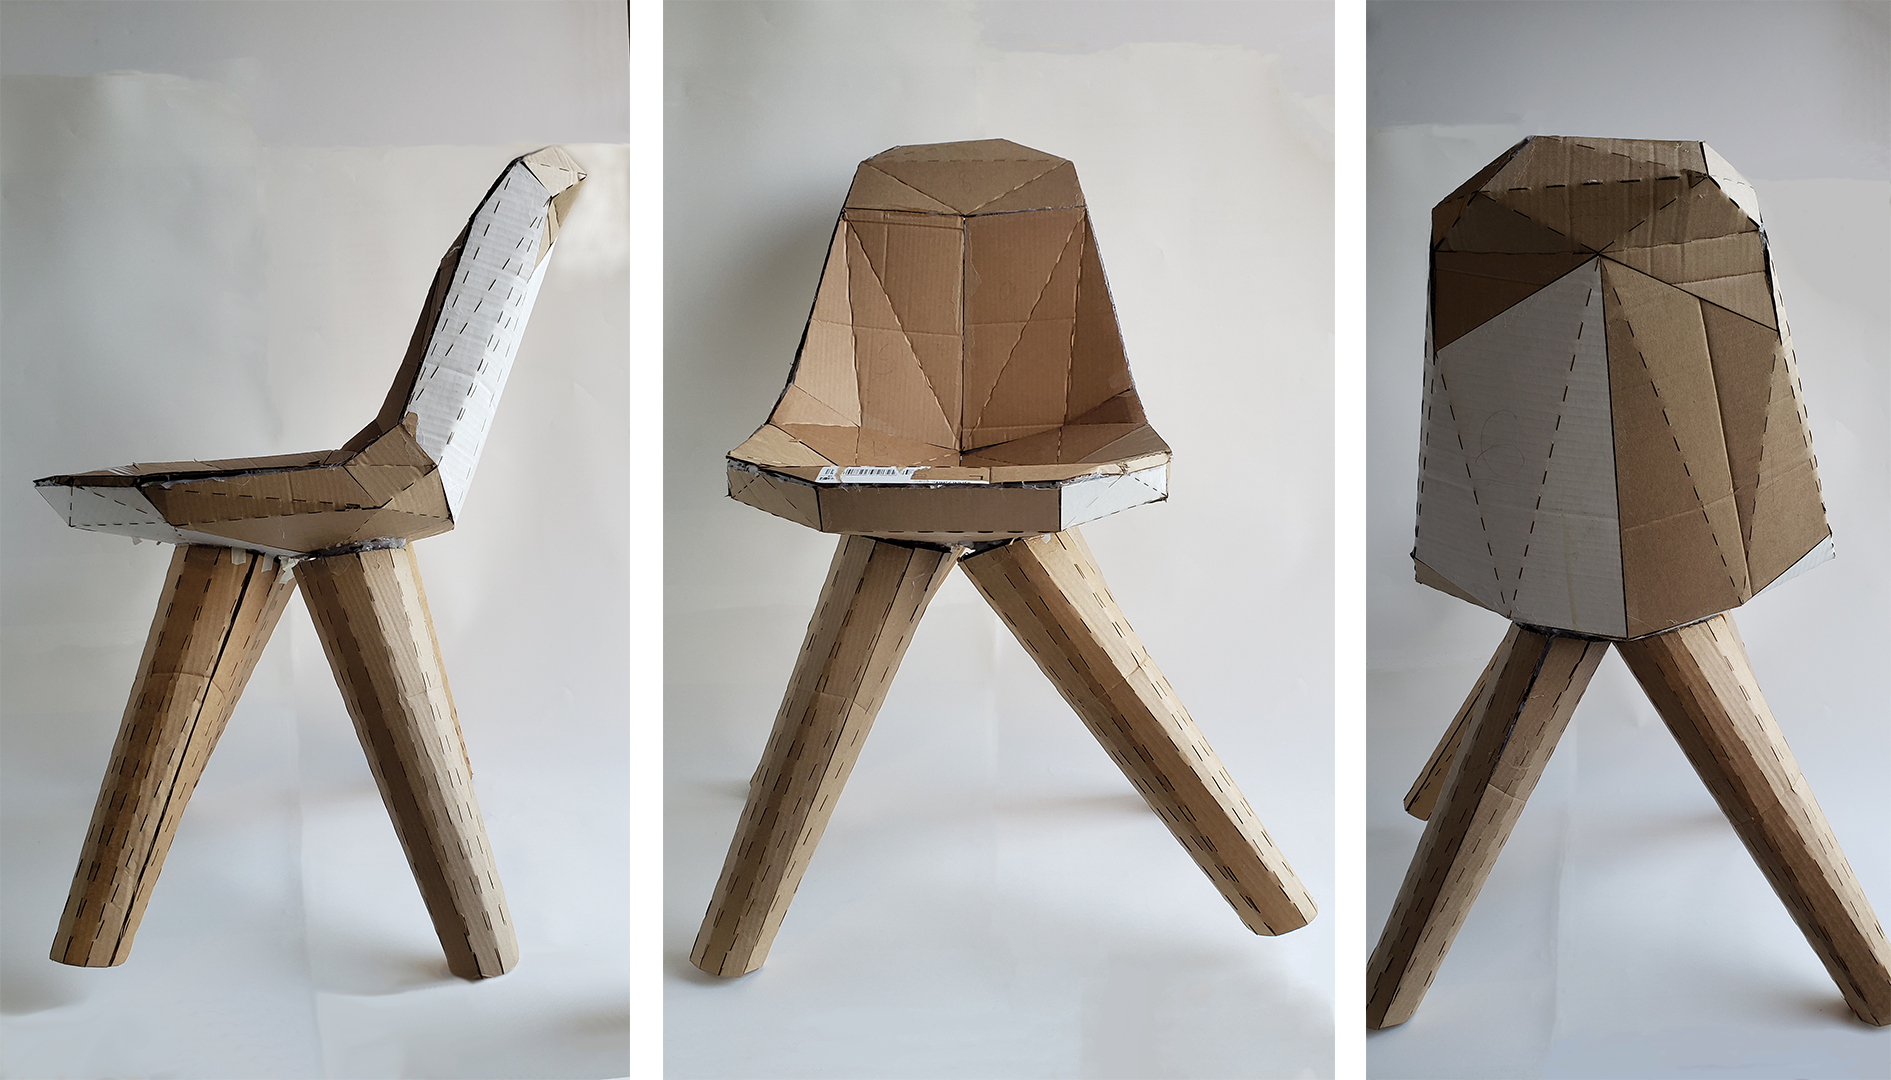 Cardboard Chair Project